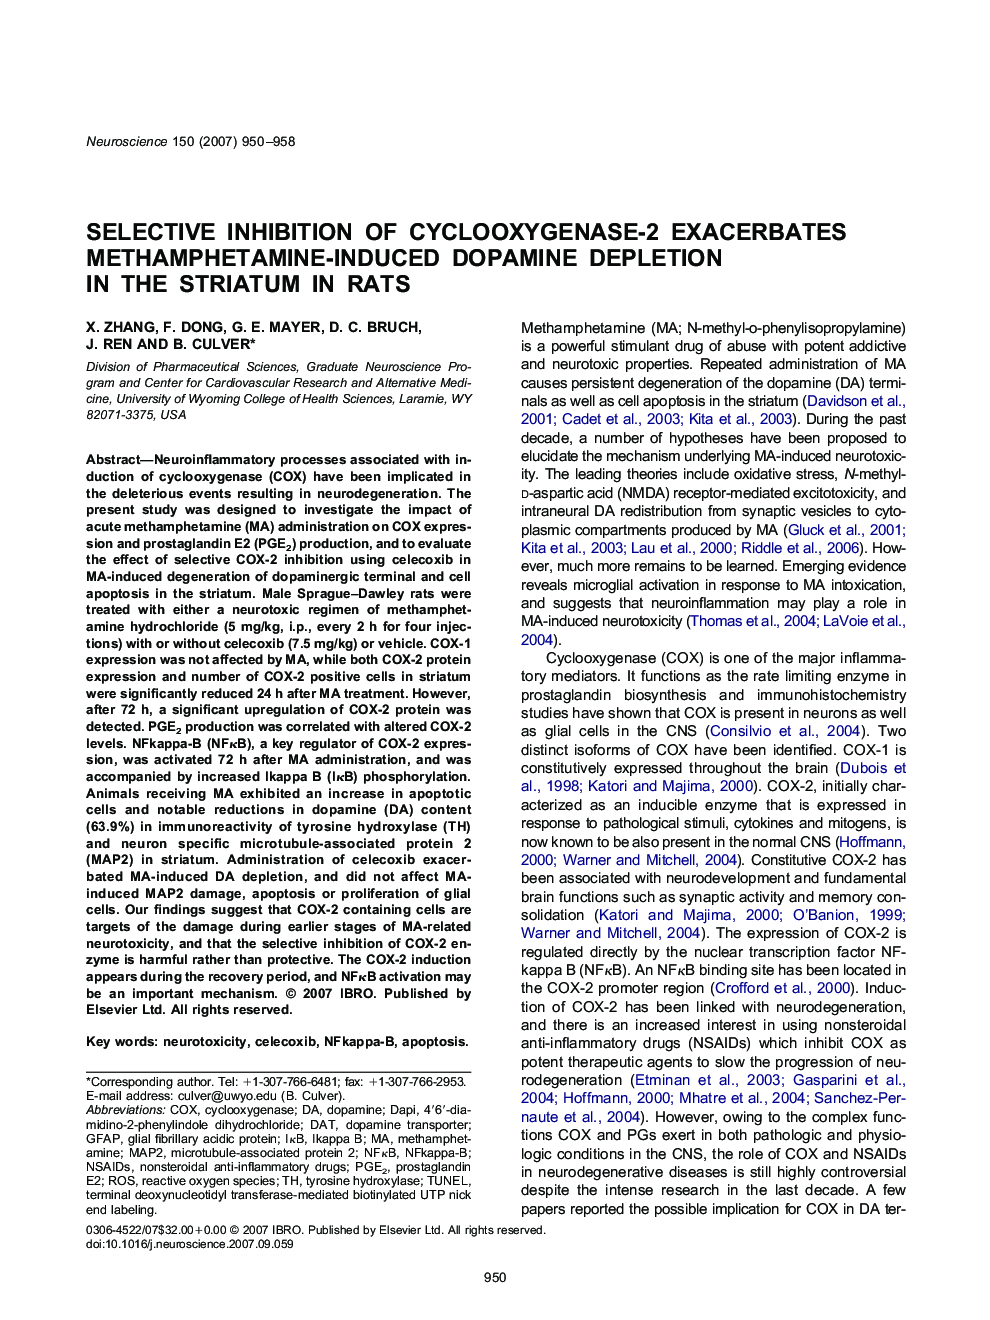 Selective inhibition of cyclooxygenase-2 exacerbates methamphetamine-induced dopamine depletion in the striatum in rats